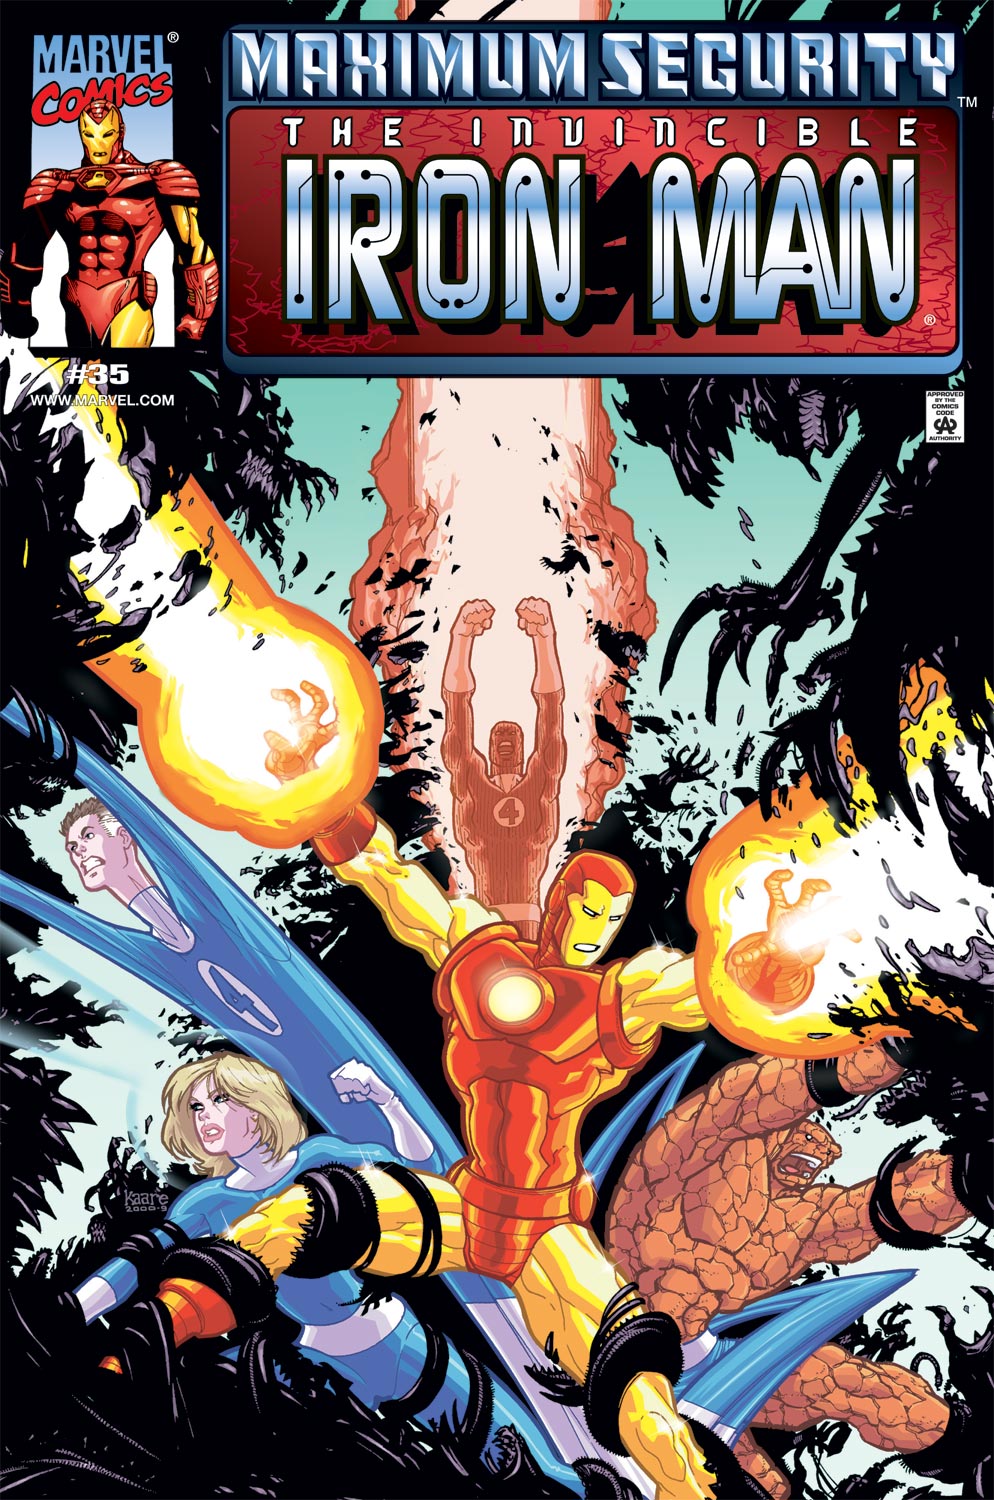 Iron Man (1998) #35